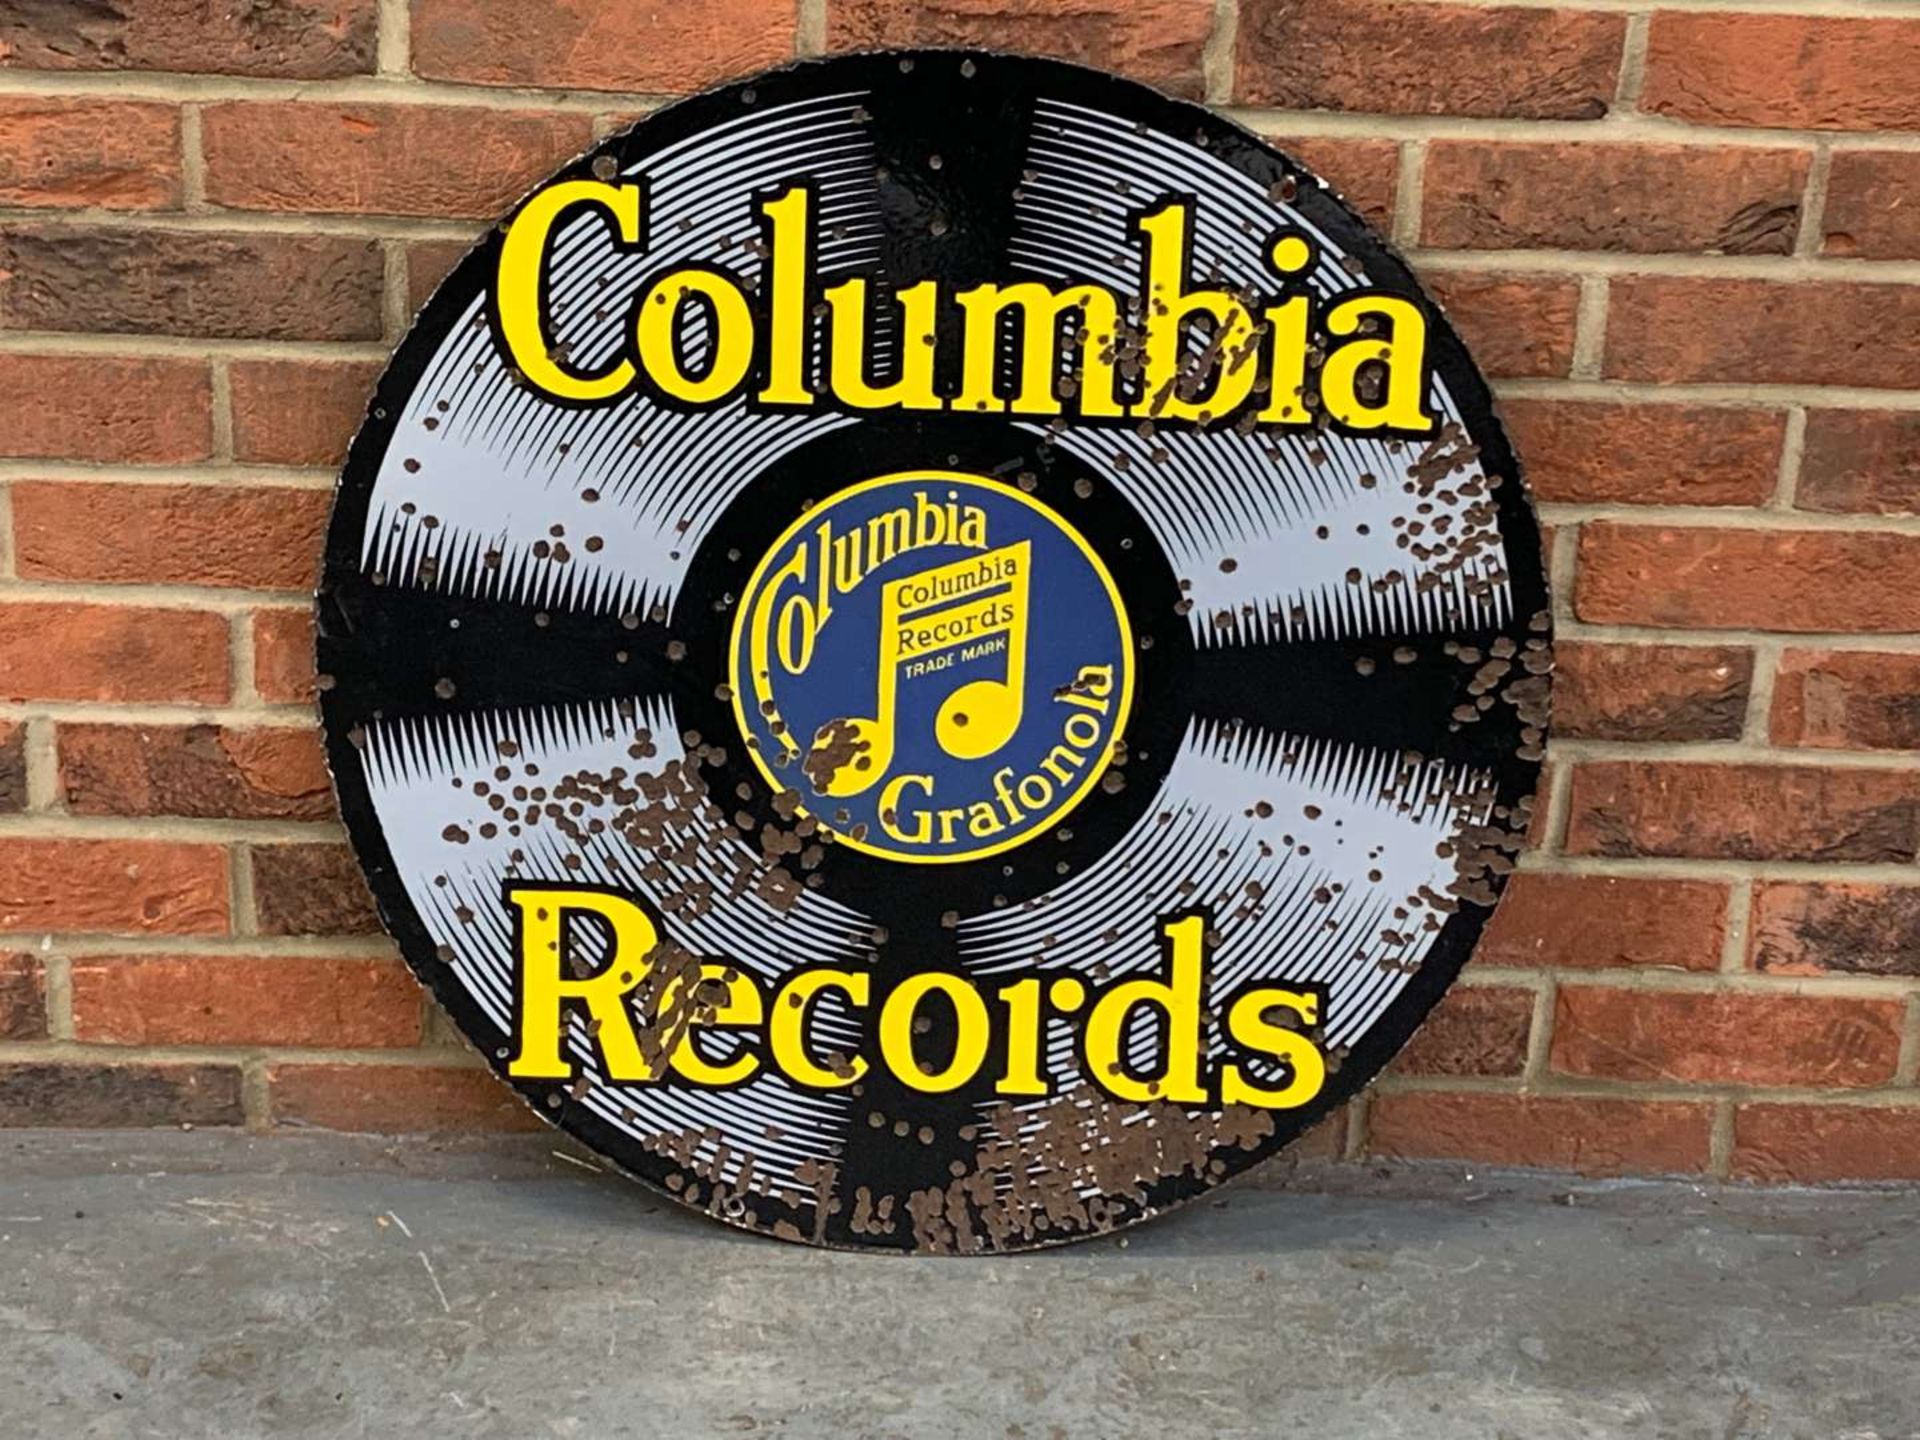 Original Columbia Records Circular Hanging Enamel Sign - Image 2 of 2